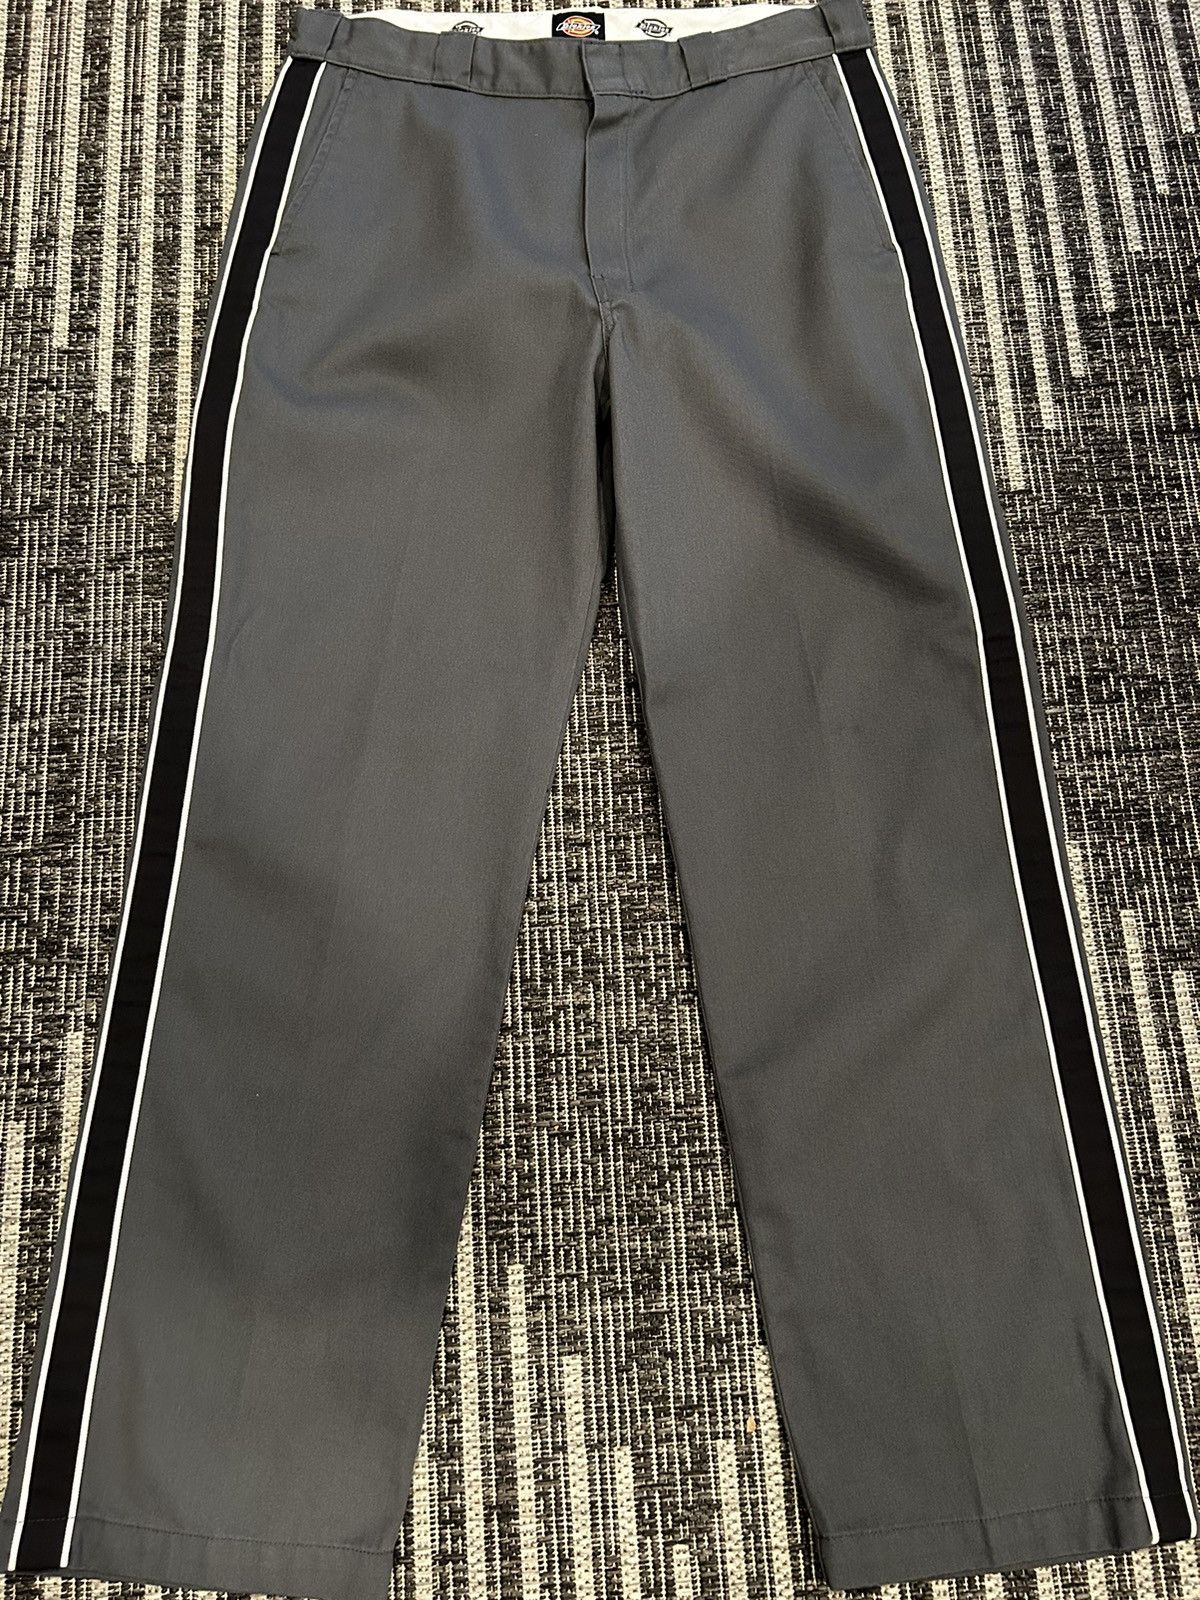 Supreme Supreme Dickies Stripe 874 Work Pants | Grailed